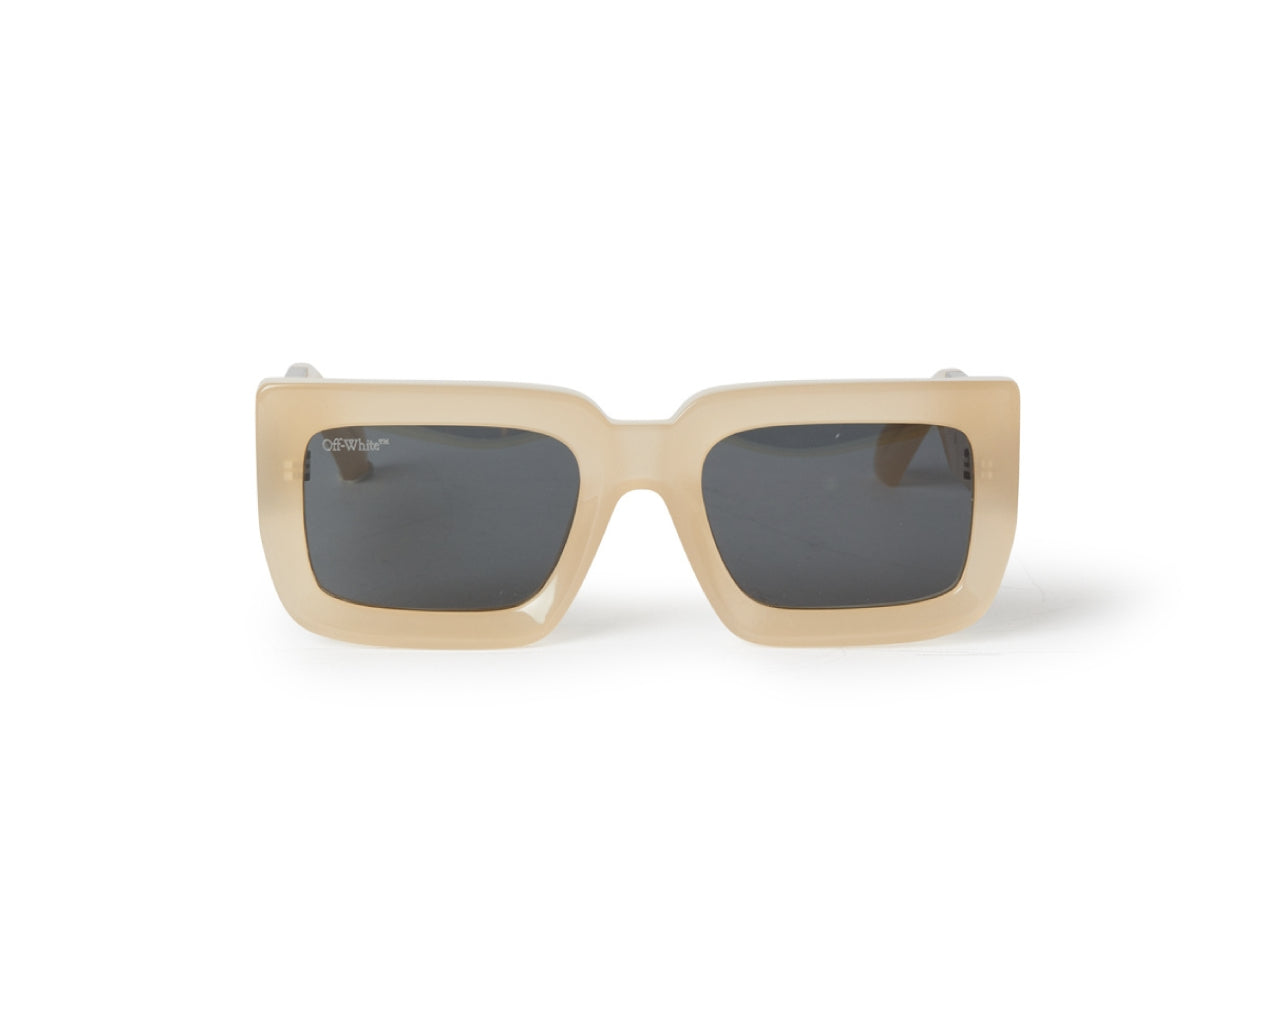 Off-White Boston Sand Dark Grey 55mm New Sunglasses